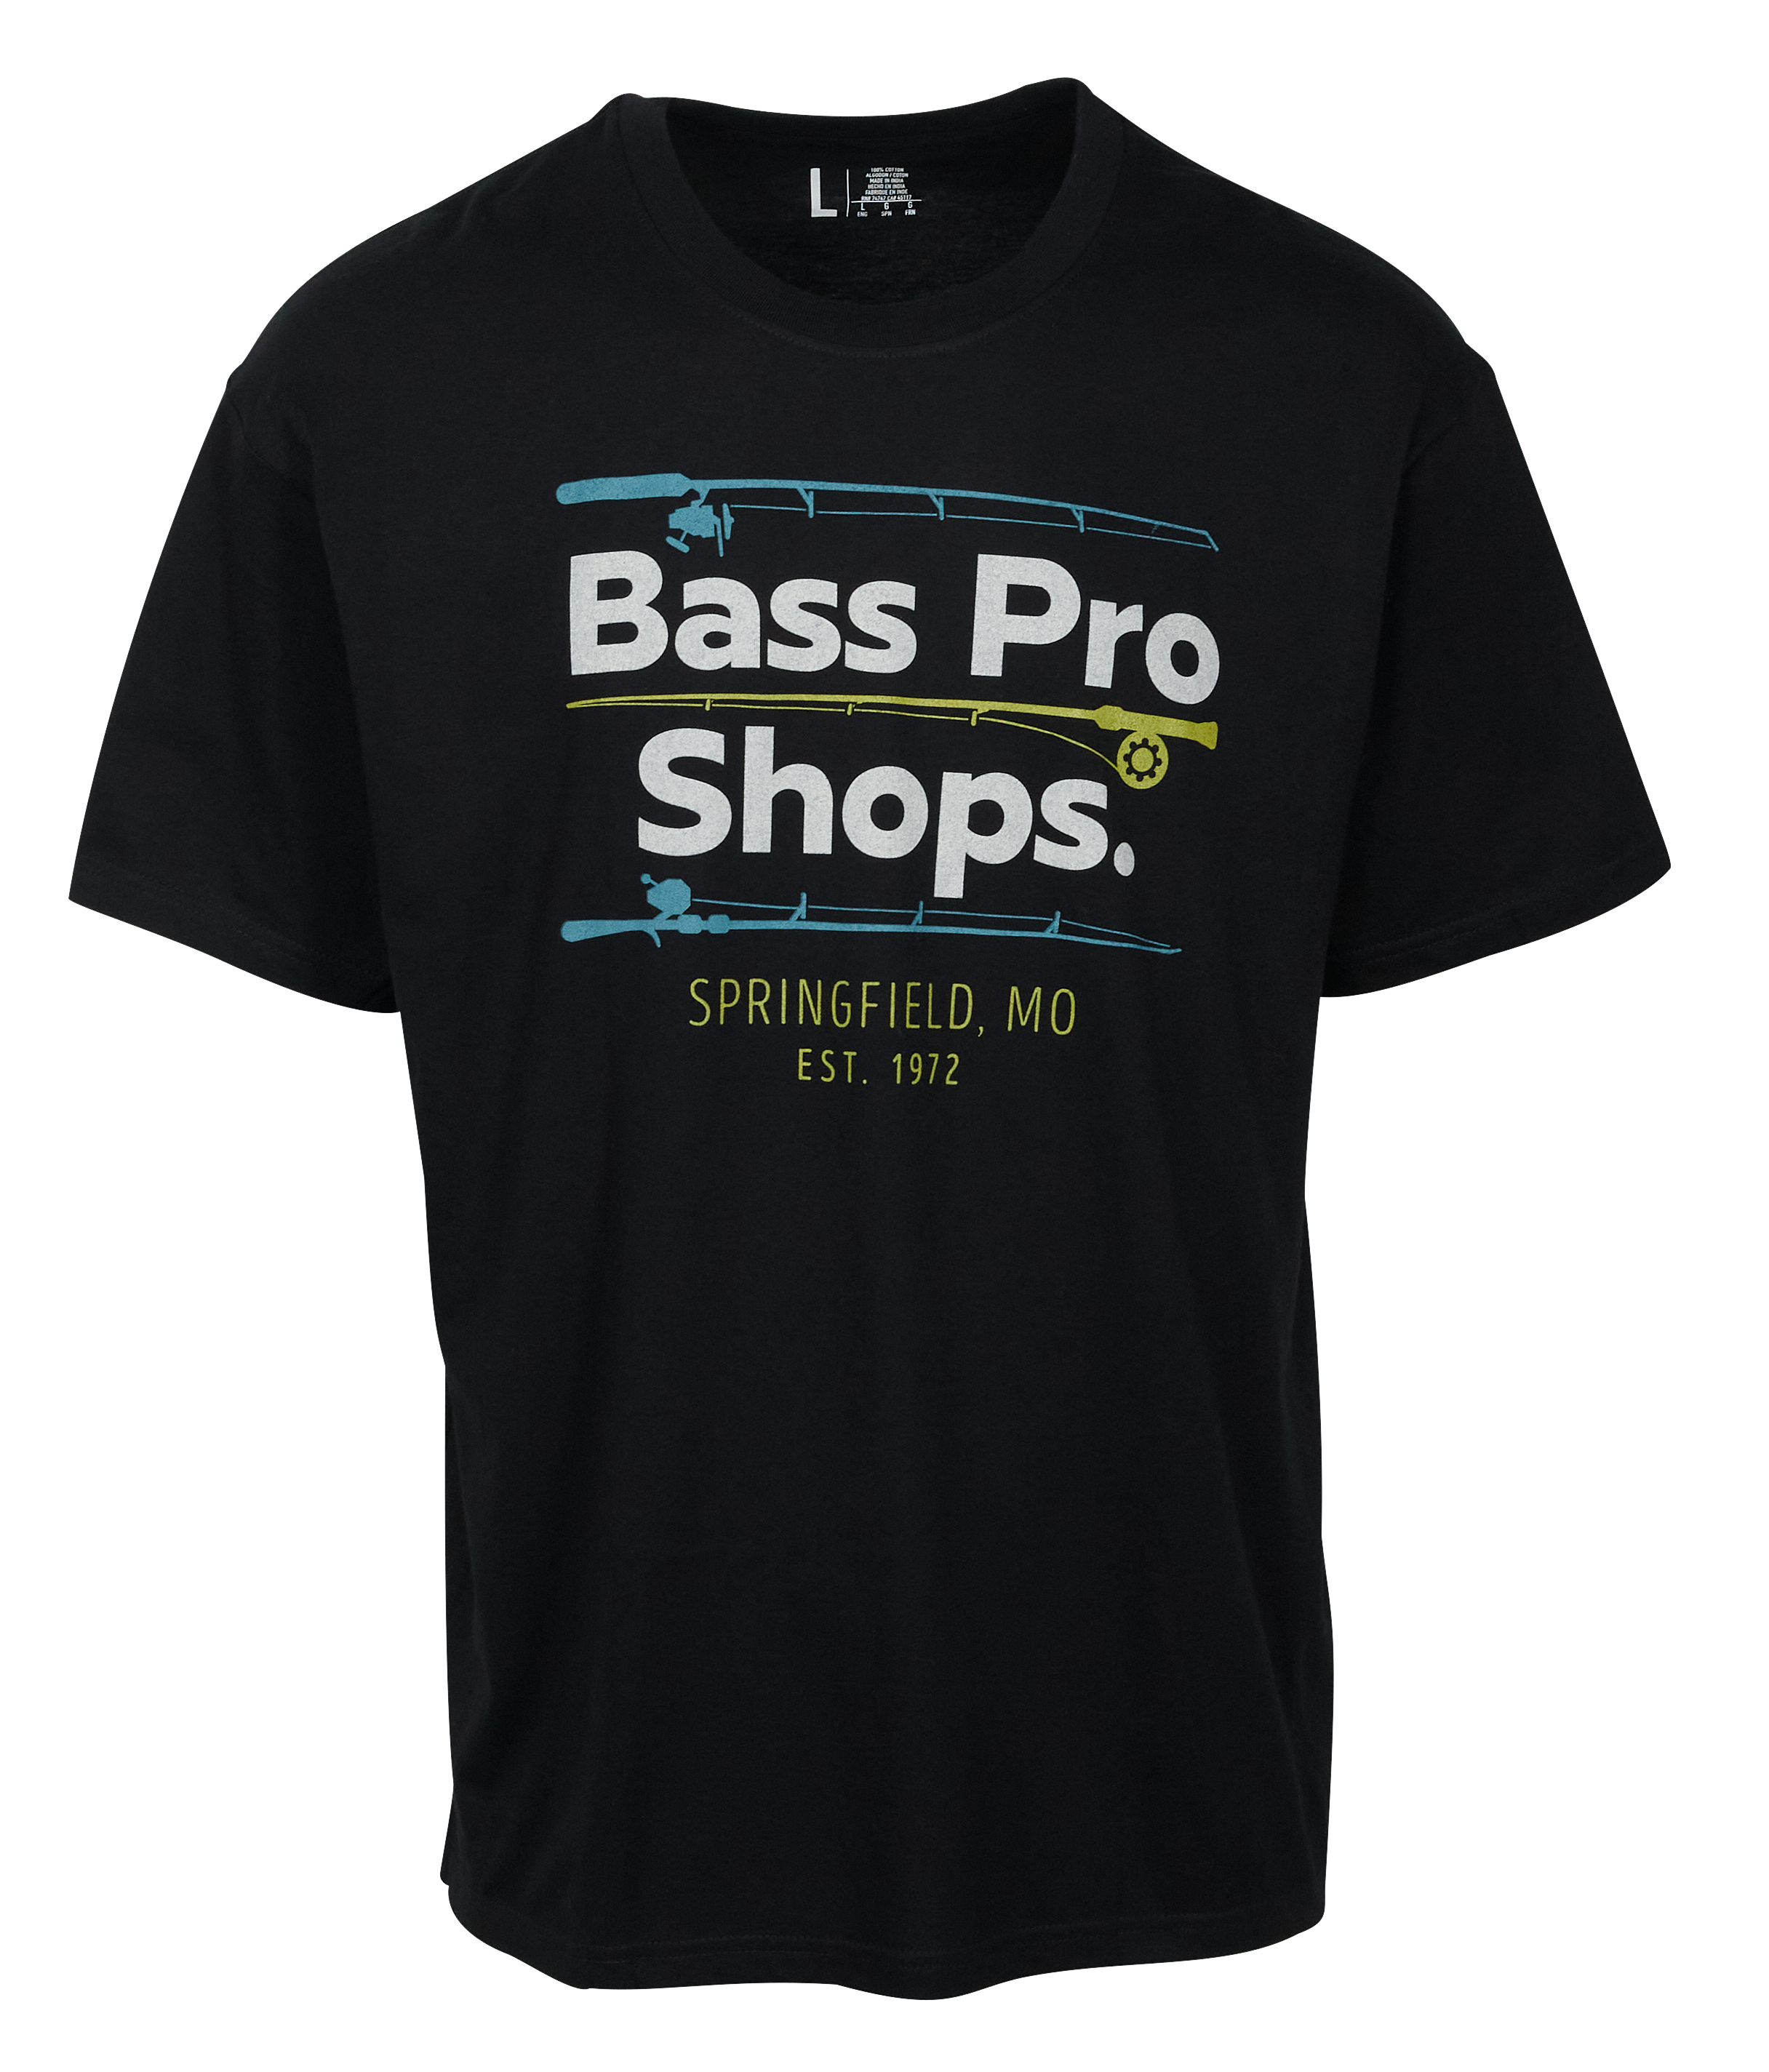 Bass Pro Shops 3 Poles Short-Sleeve T-Shirt for Men - Black - 2XL